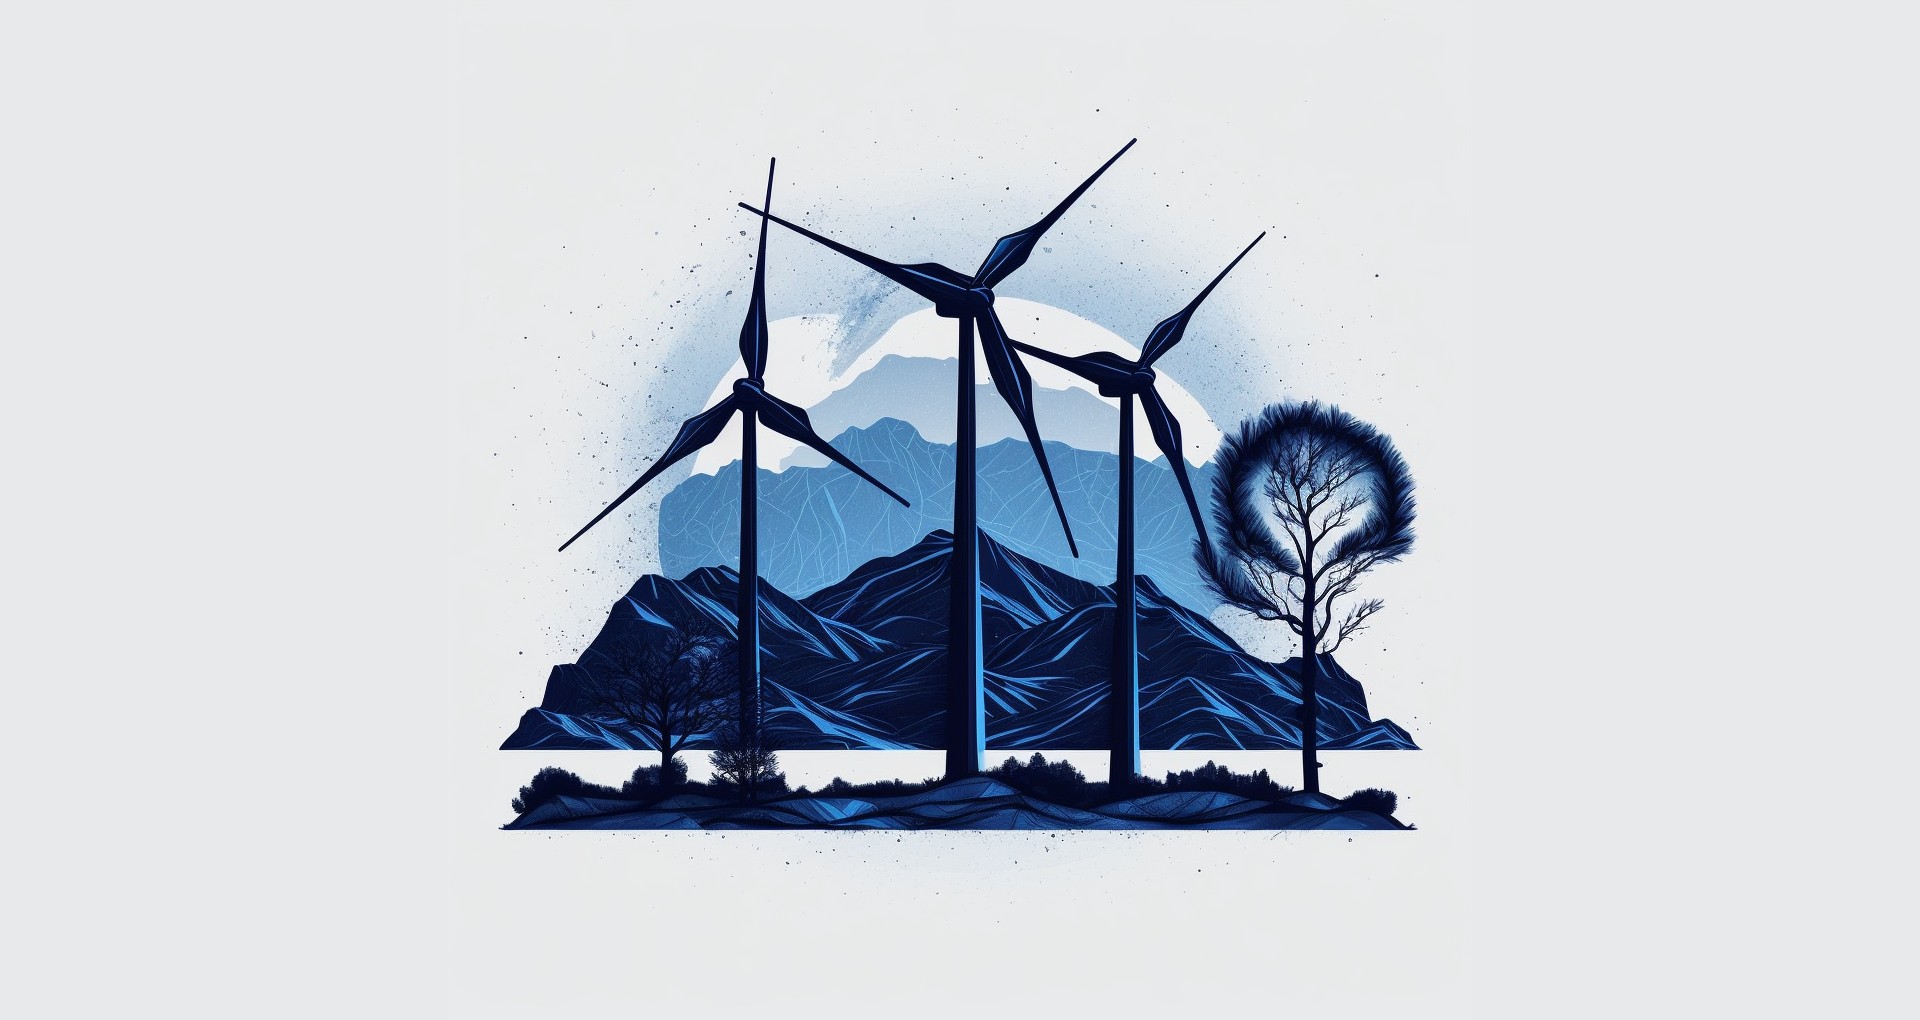 Futuristic illustrated wind turbines stand against a stark landscape